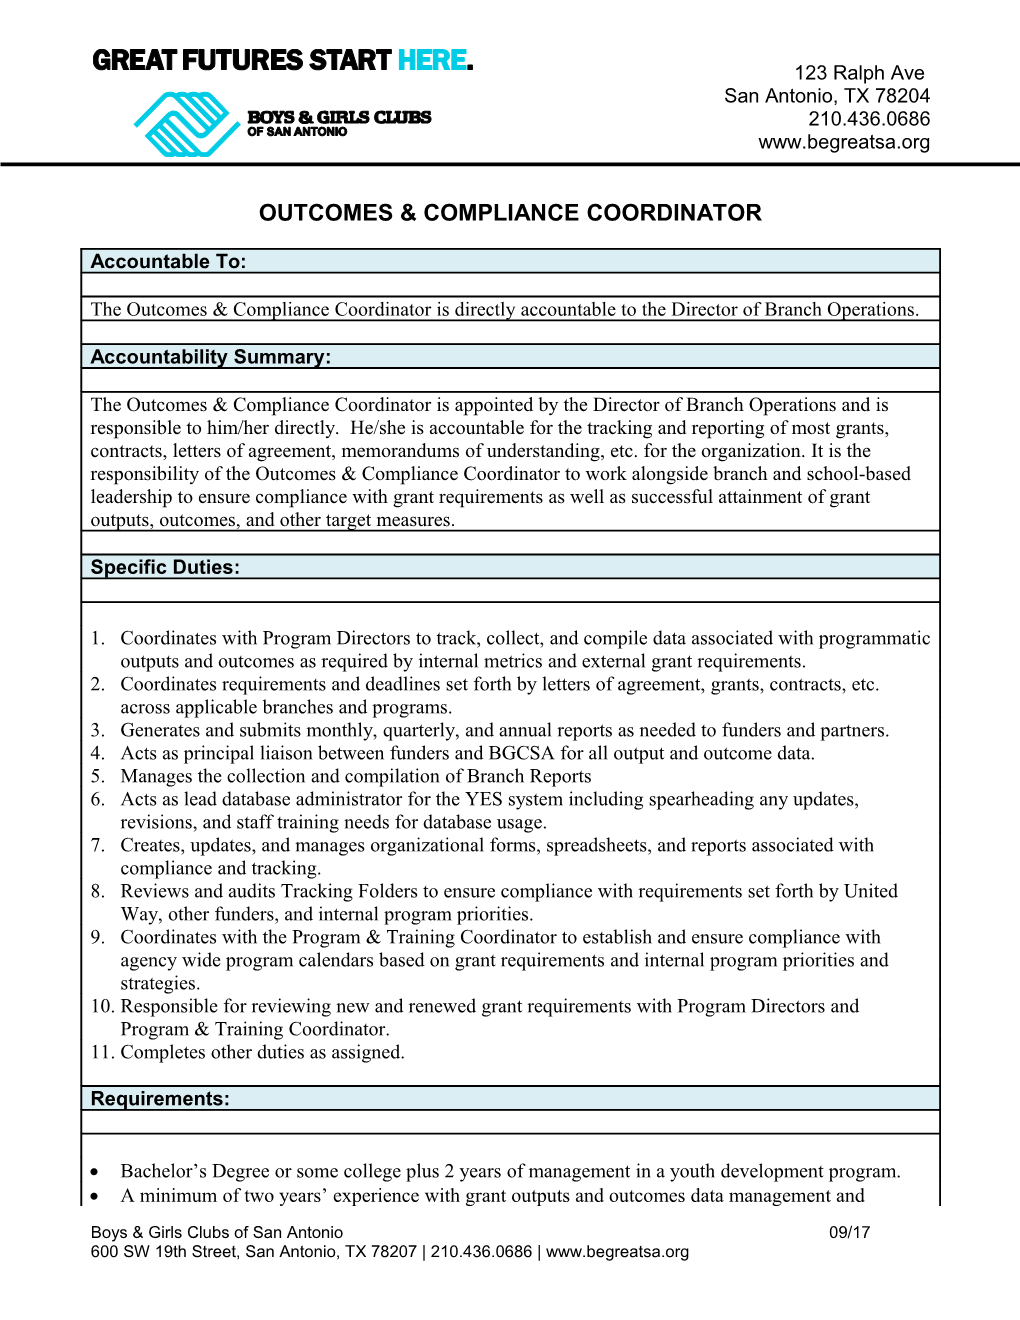 Outcomes & Compliance Coordinator